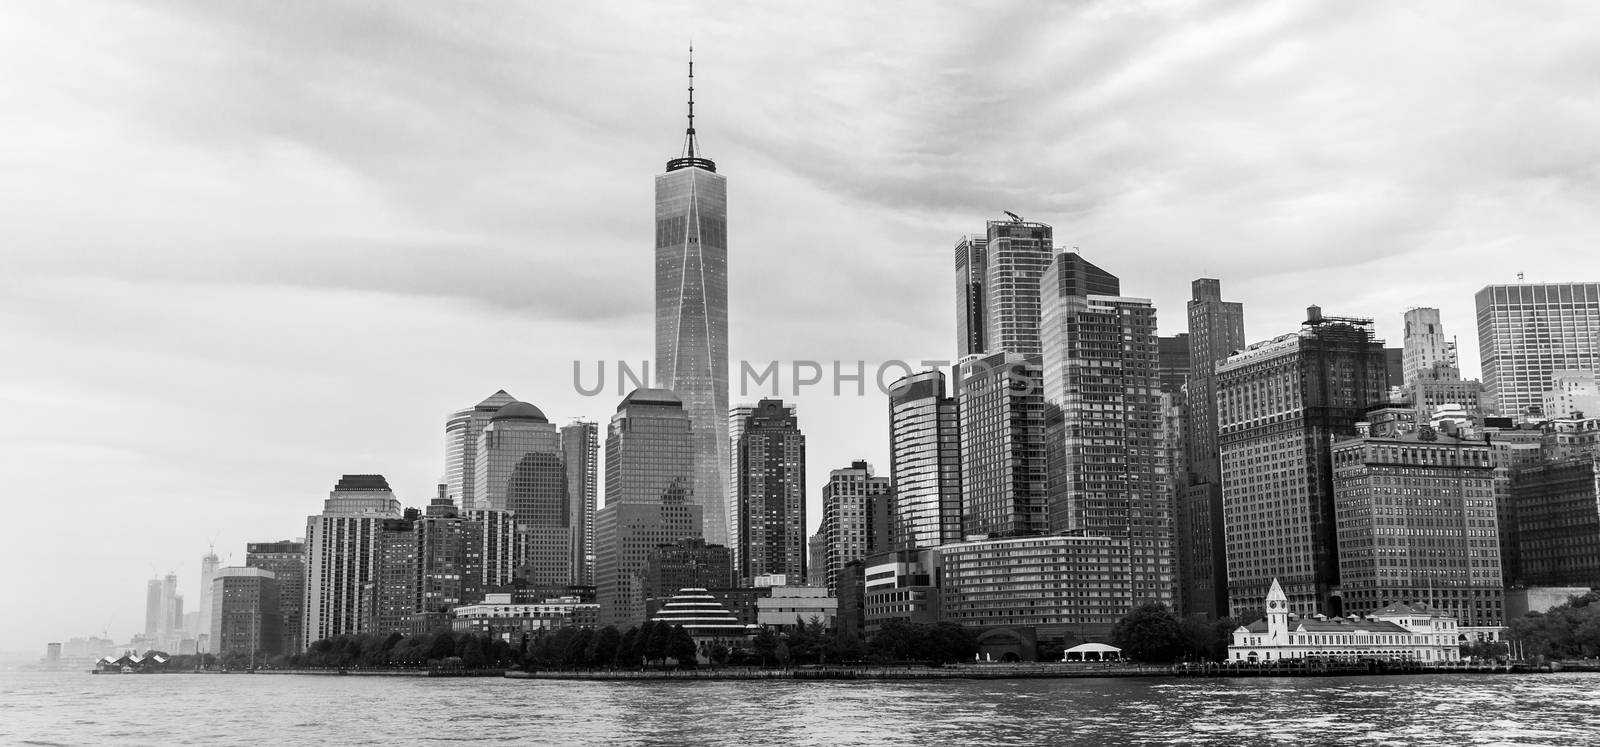 Panoramic view of Lower Manhattan, New York City, USA by kasto